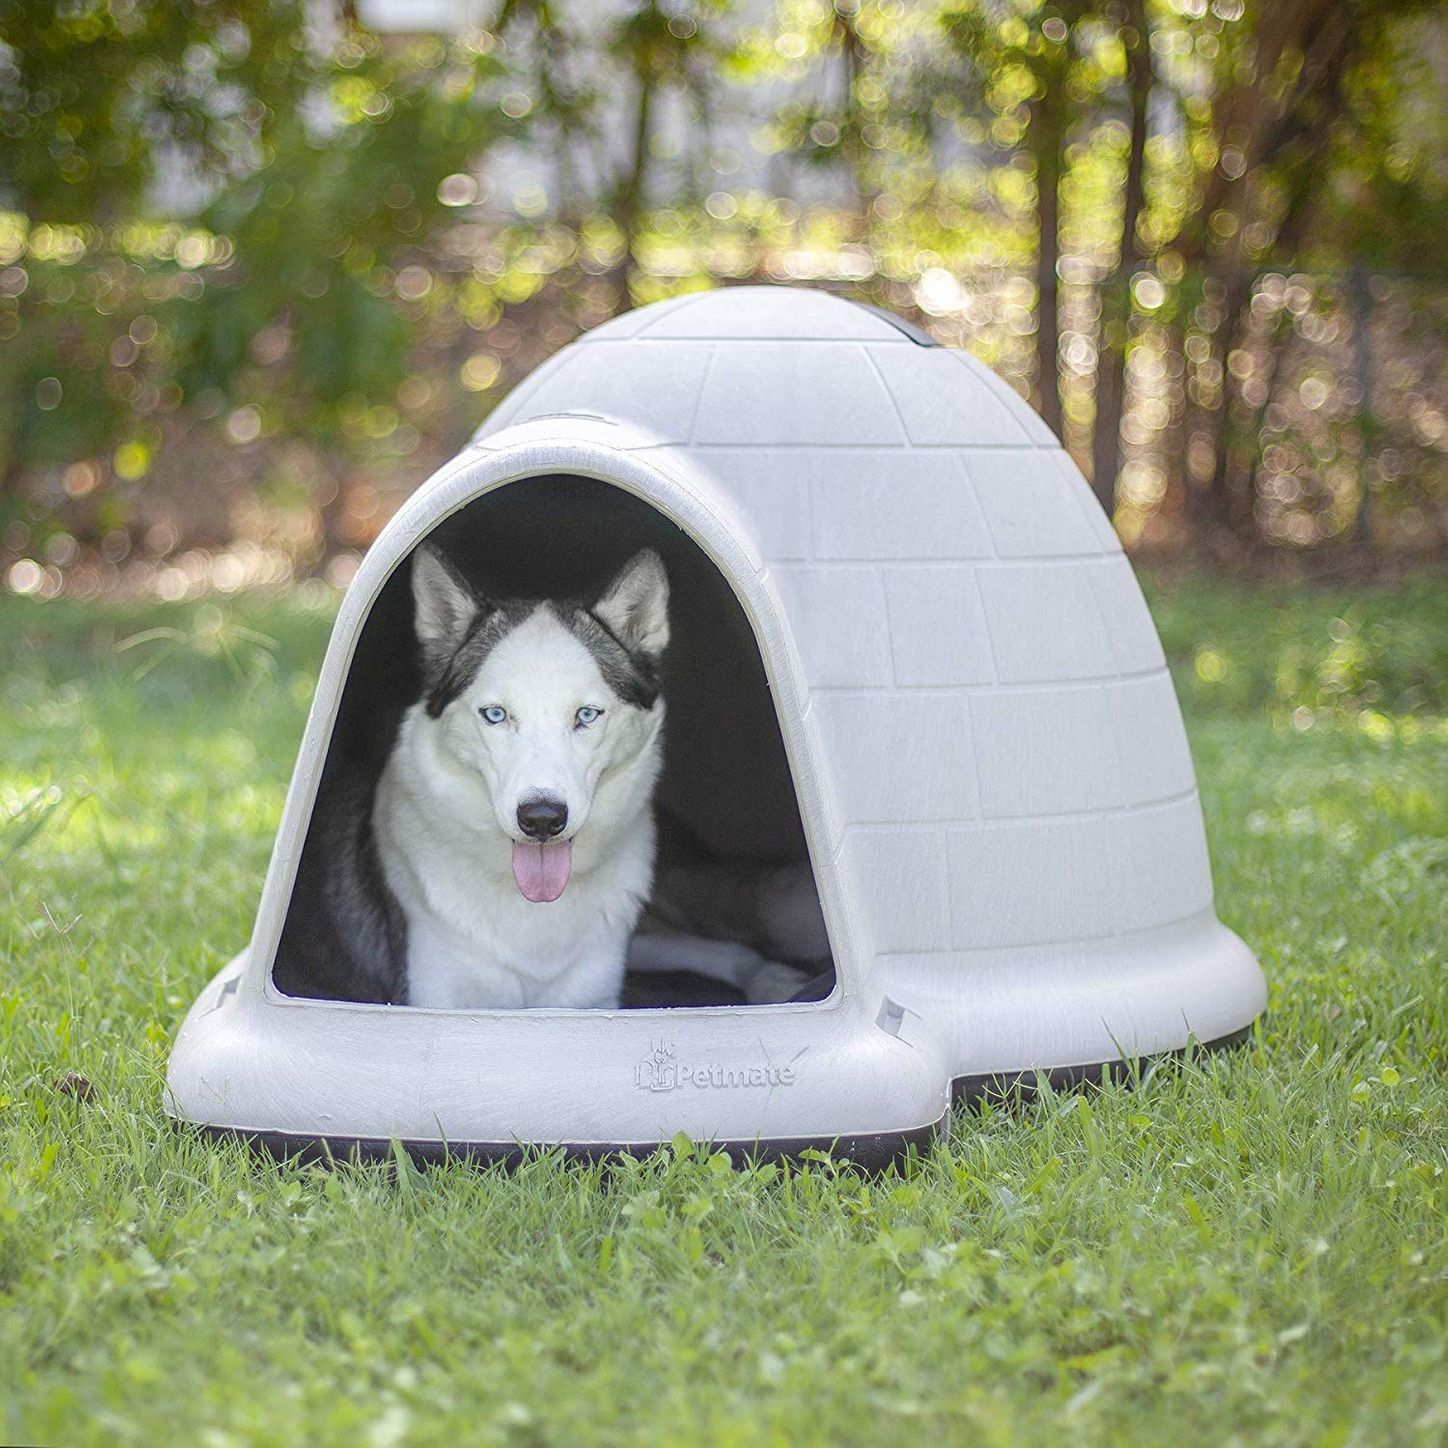 big dog houses for outside